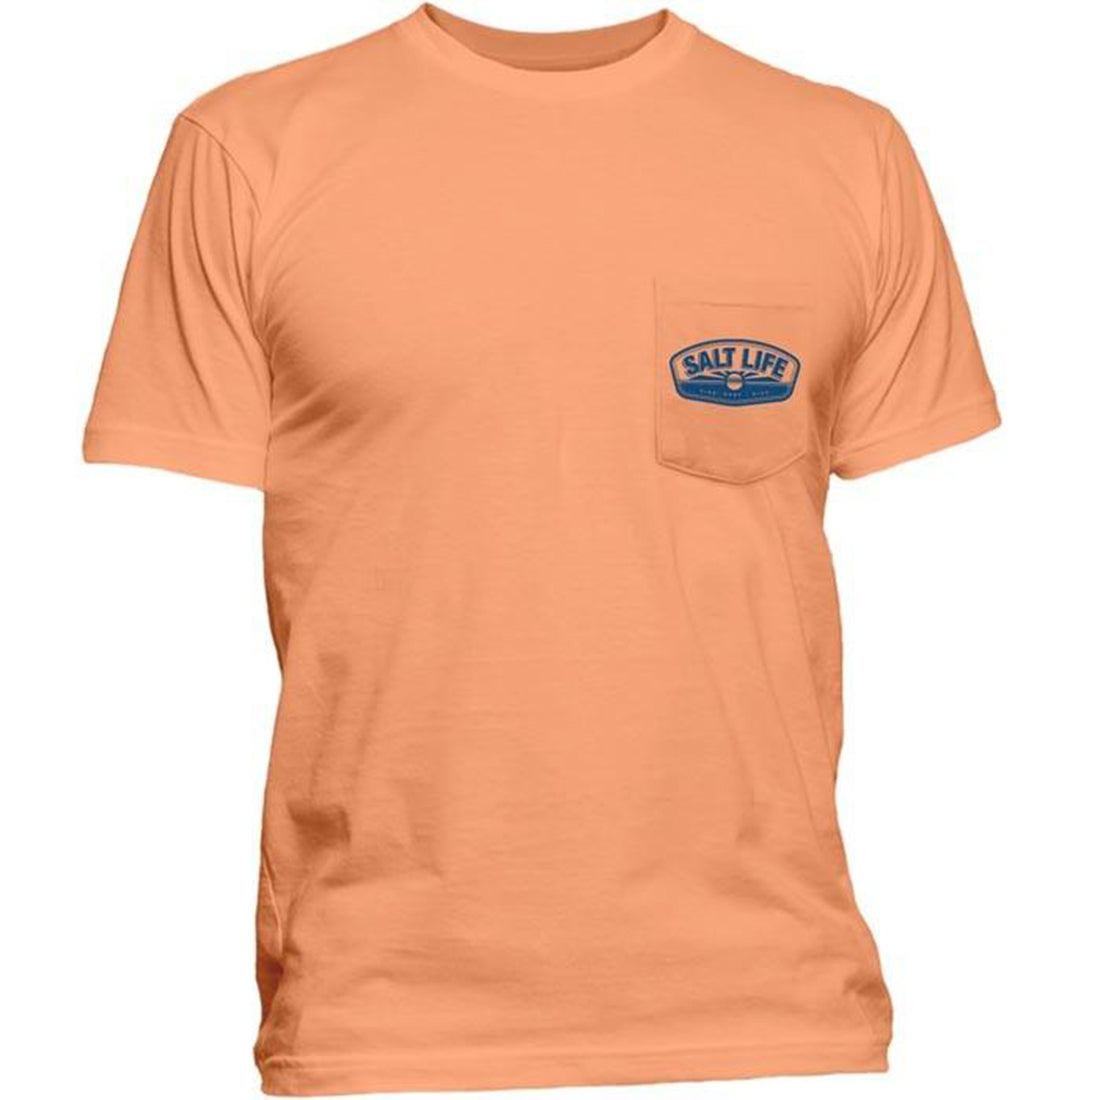 Salt Life Men's Sunset Badge Pocket T-shirt